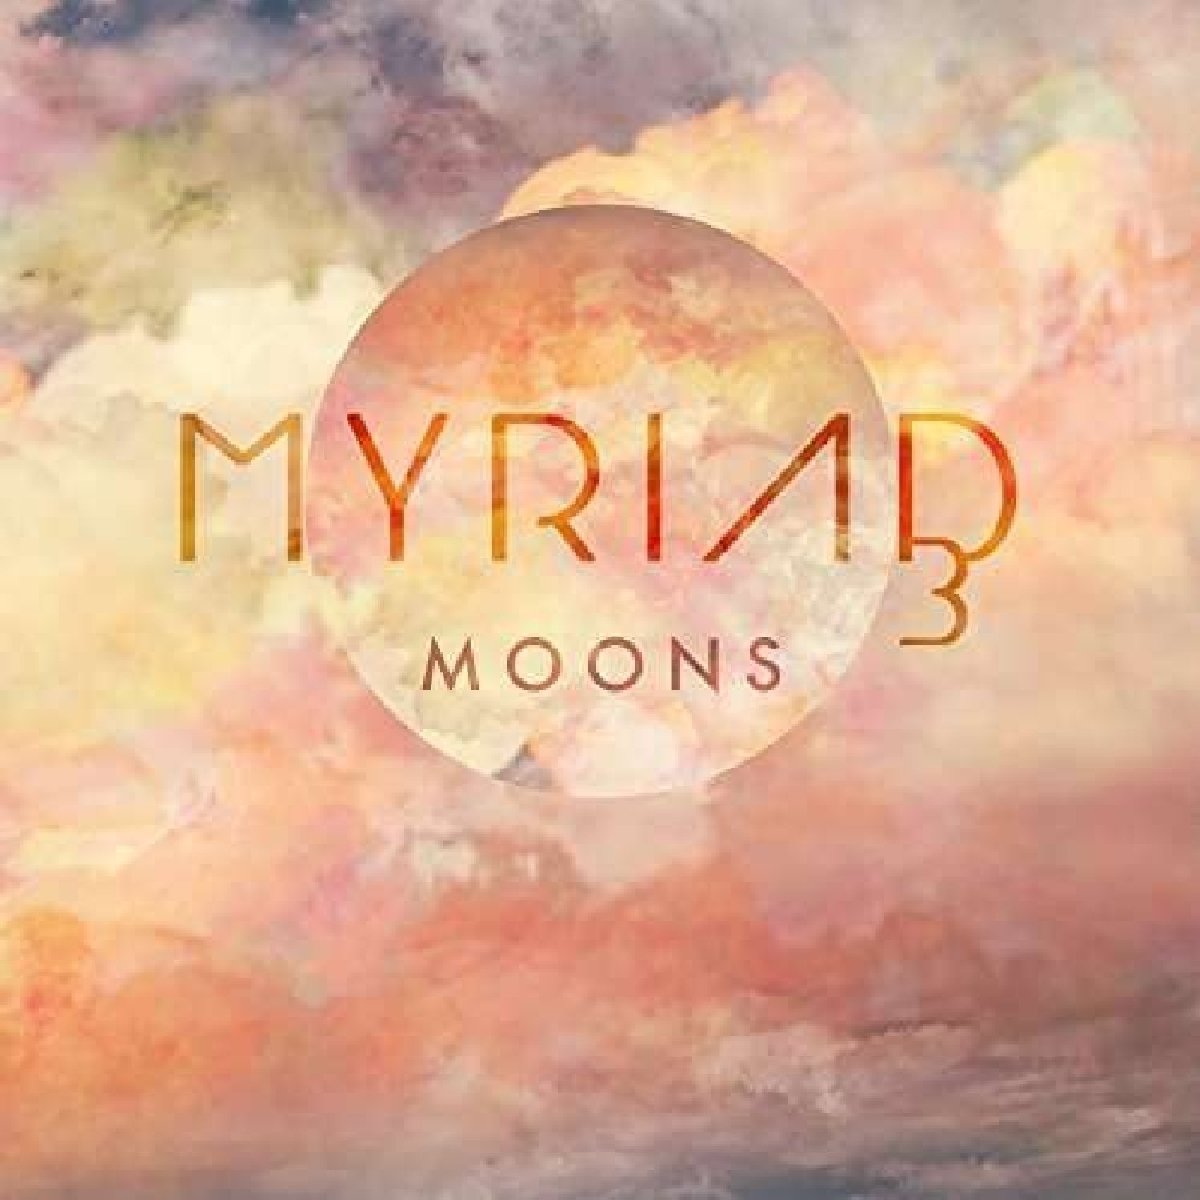 Myriad3 – Moons (2016) [FLAC 24bit/192kHz]